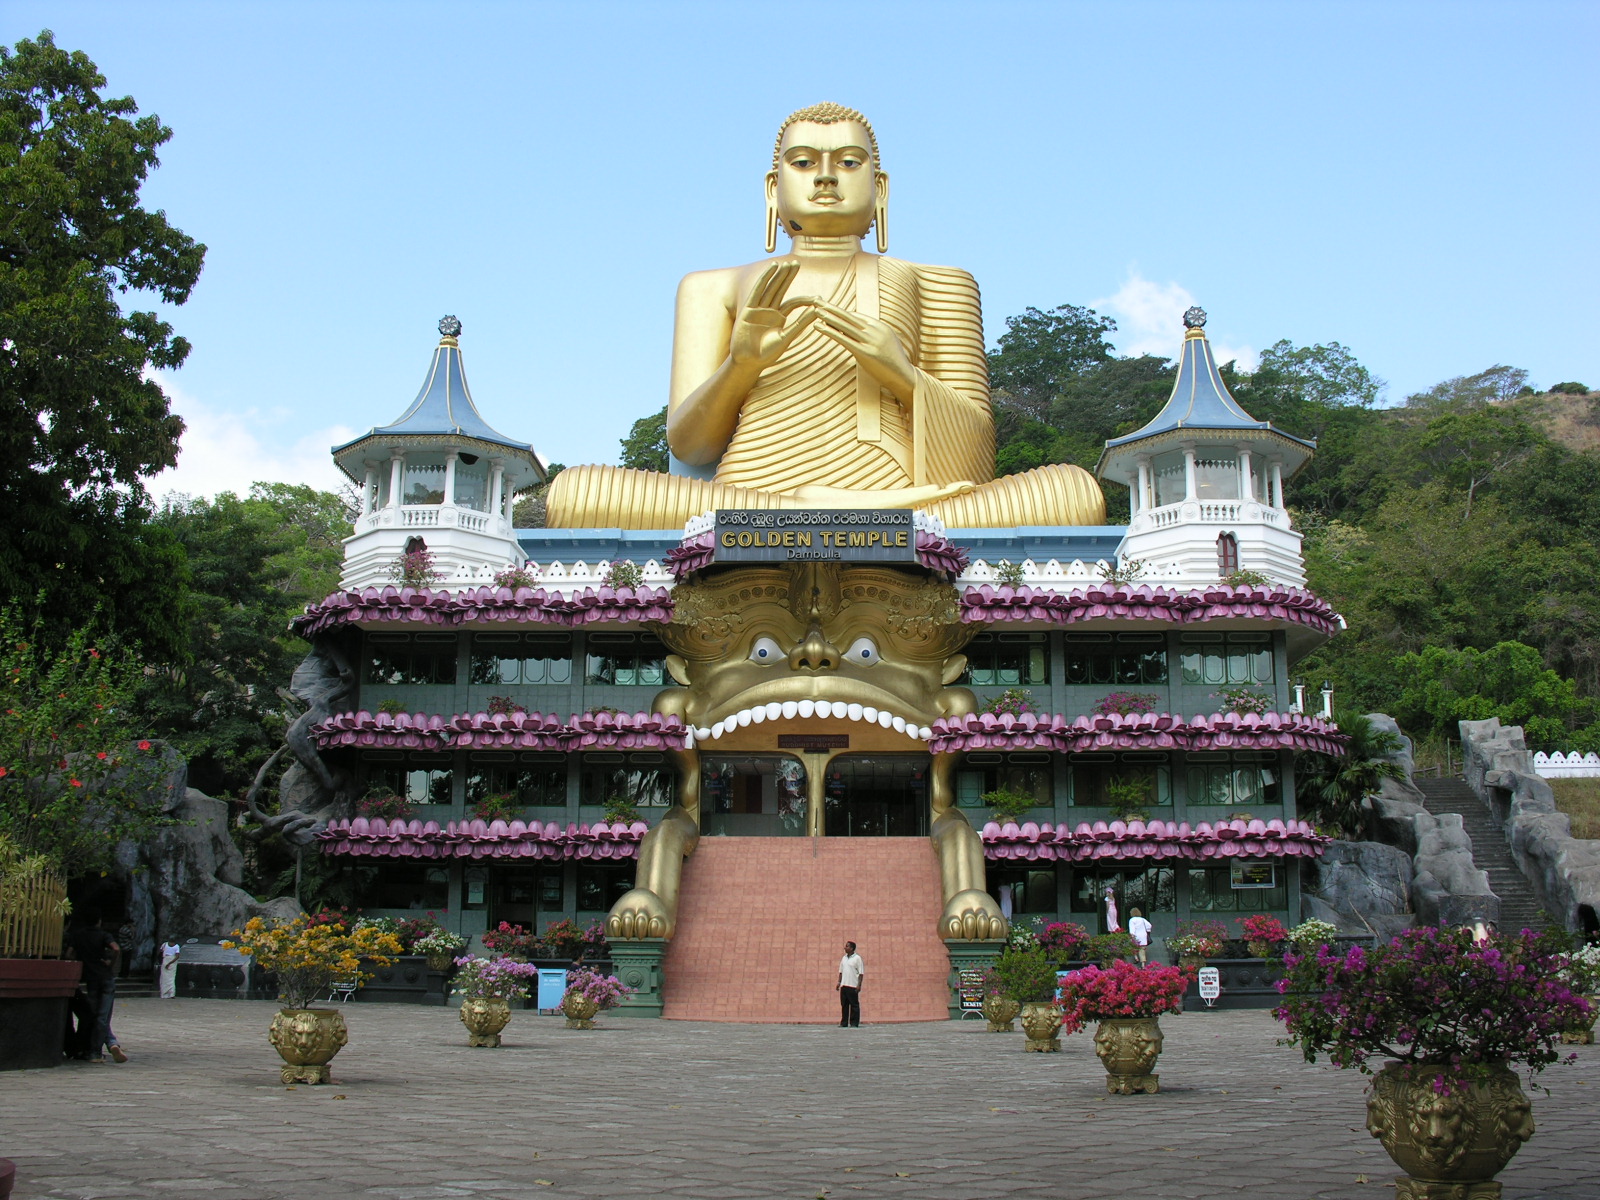 http://prasannaholidays.com/staging/wp-content/uploads/2014/05/Golden-Temple-Dambulla-Most-Popular-Tourist-Attractions-in-Sri-Lanka.jpg